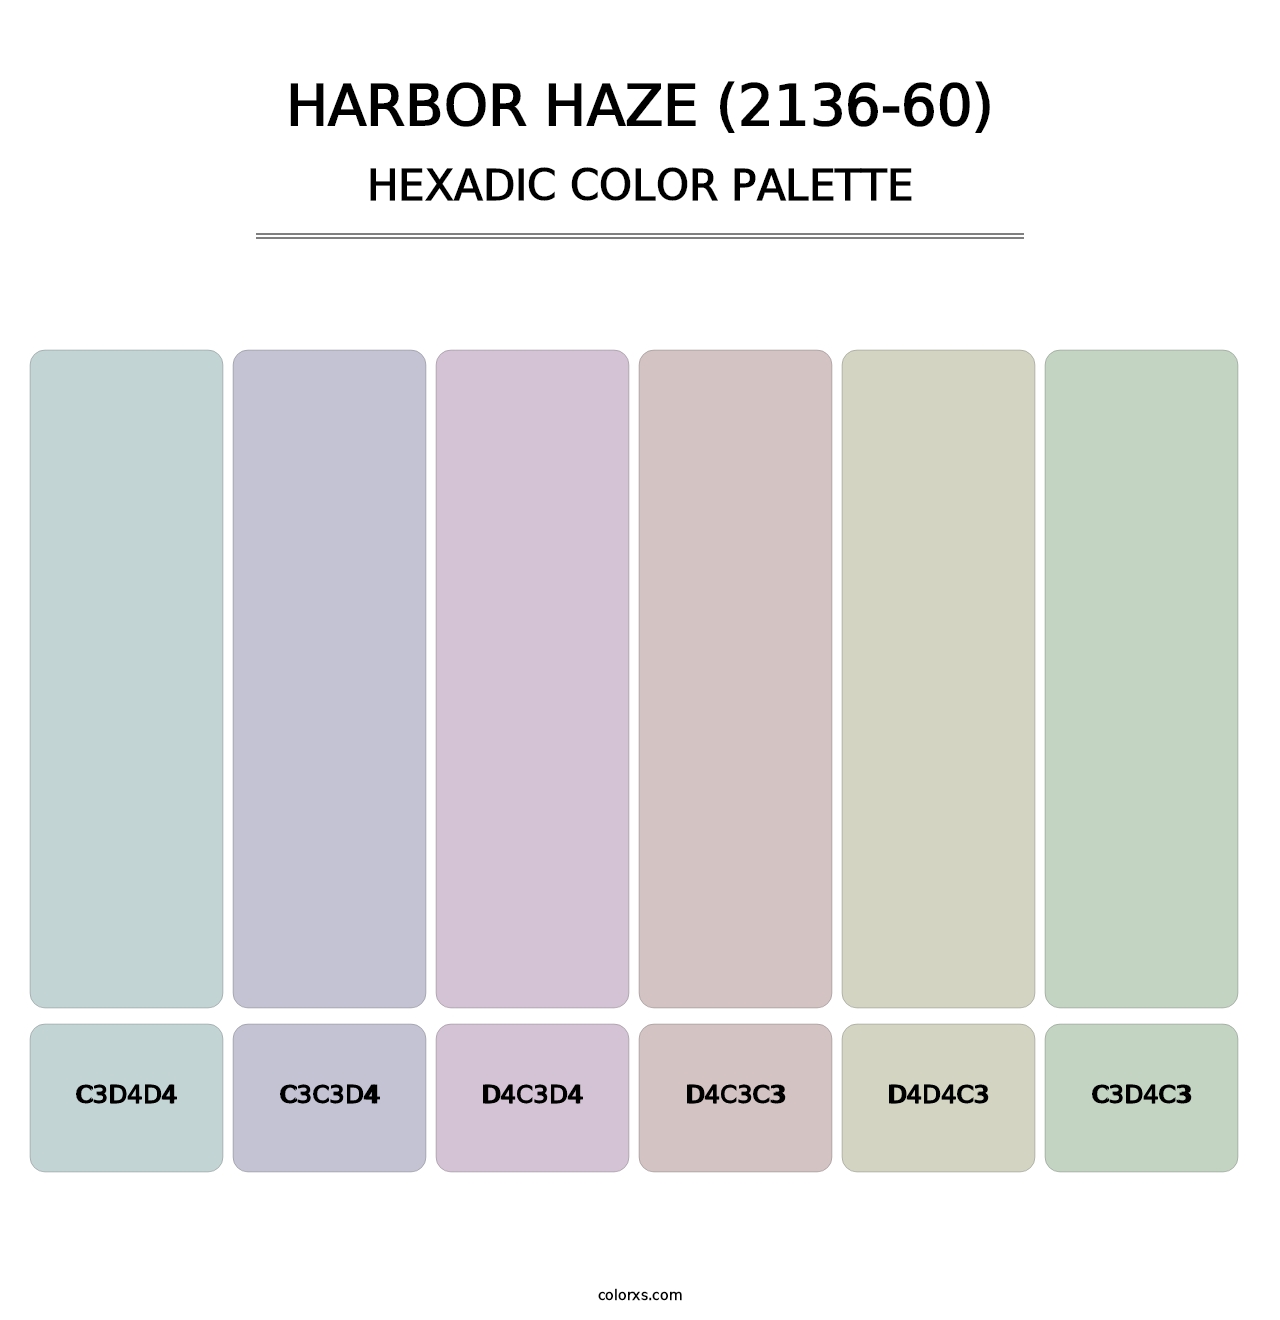 Harbor Haze (2136-60) - Hexadic Color Palette